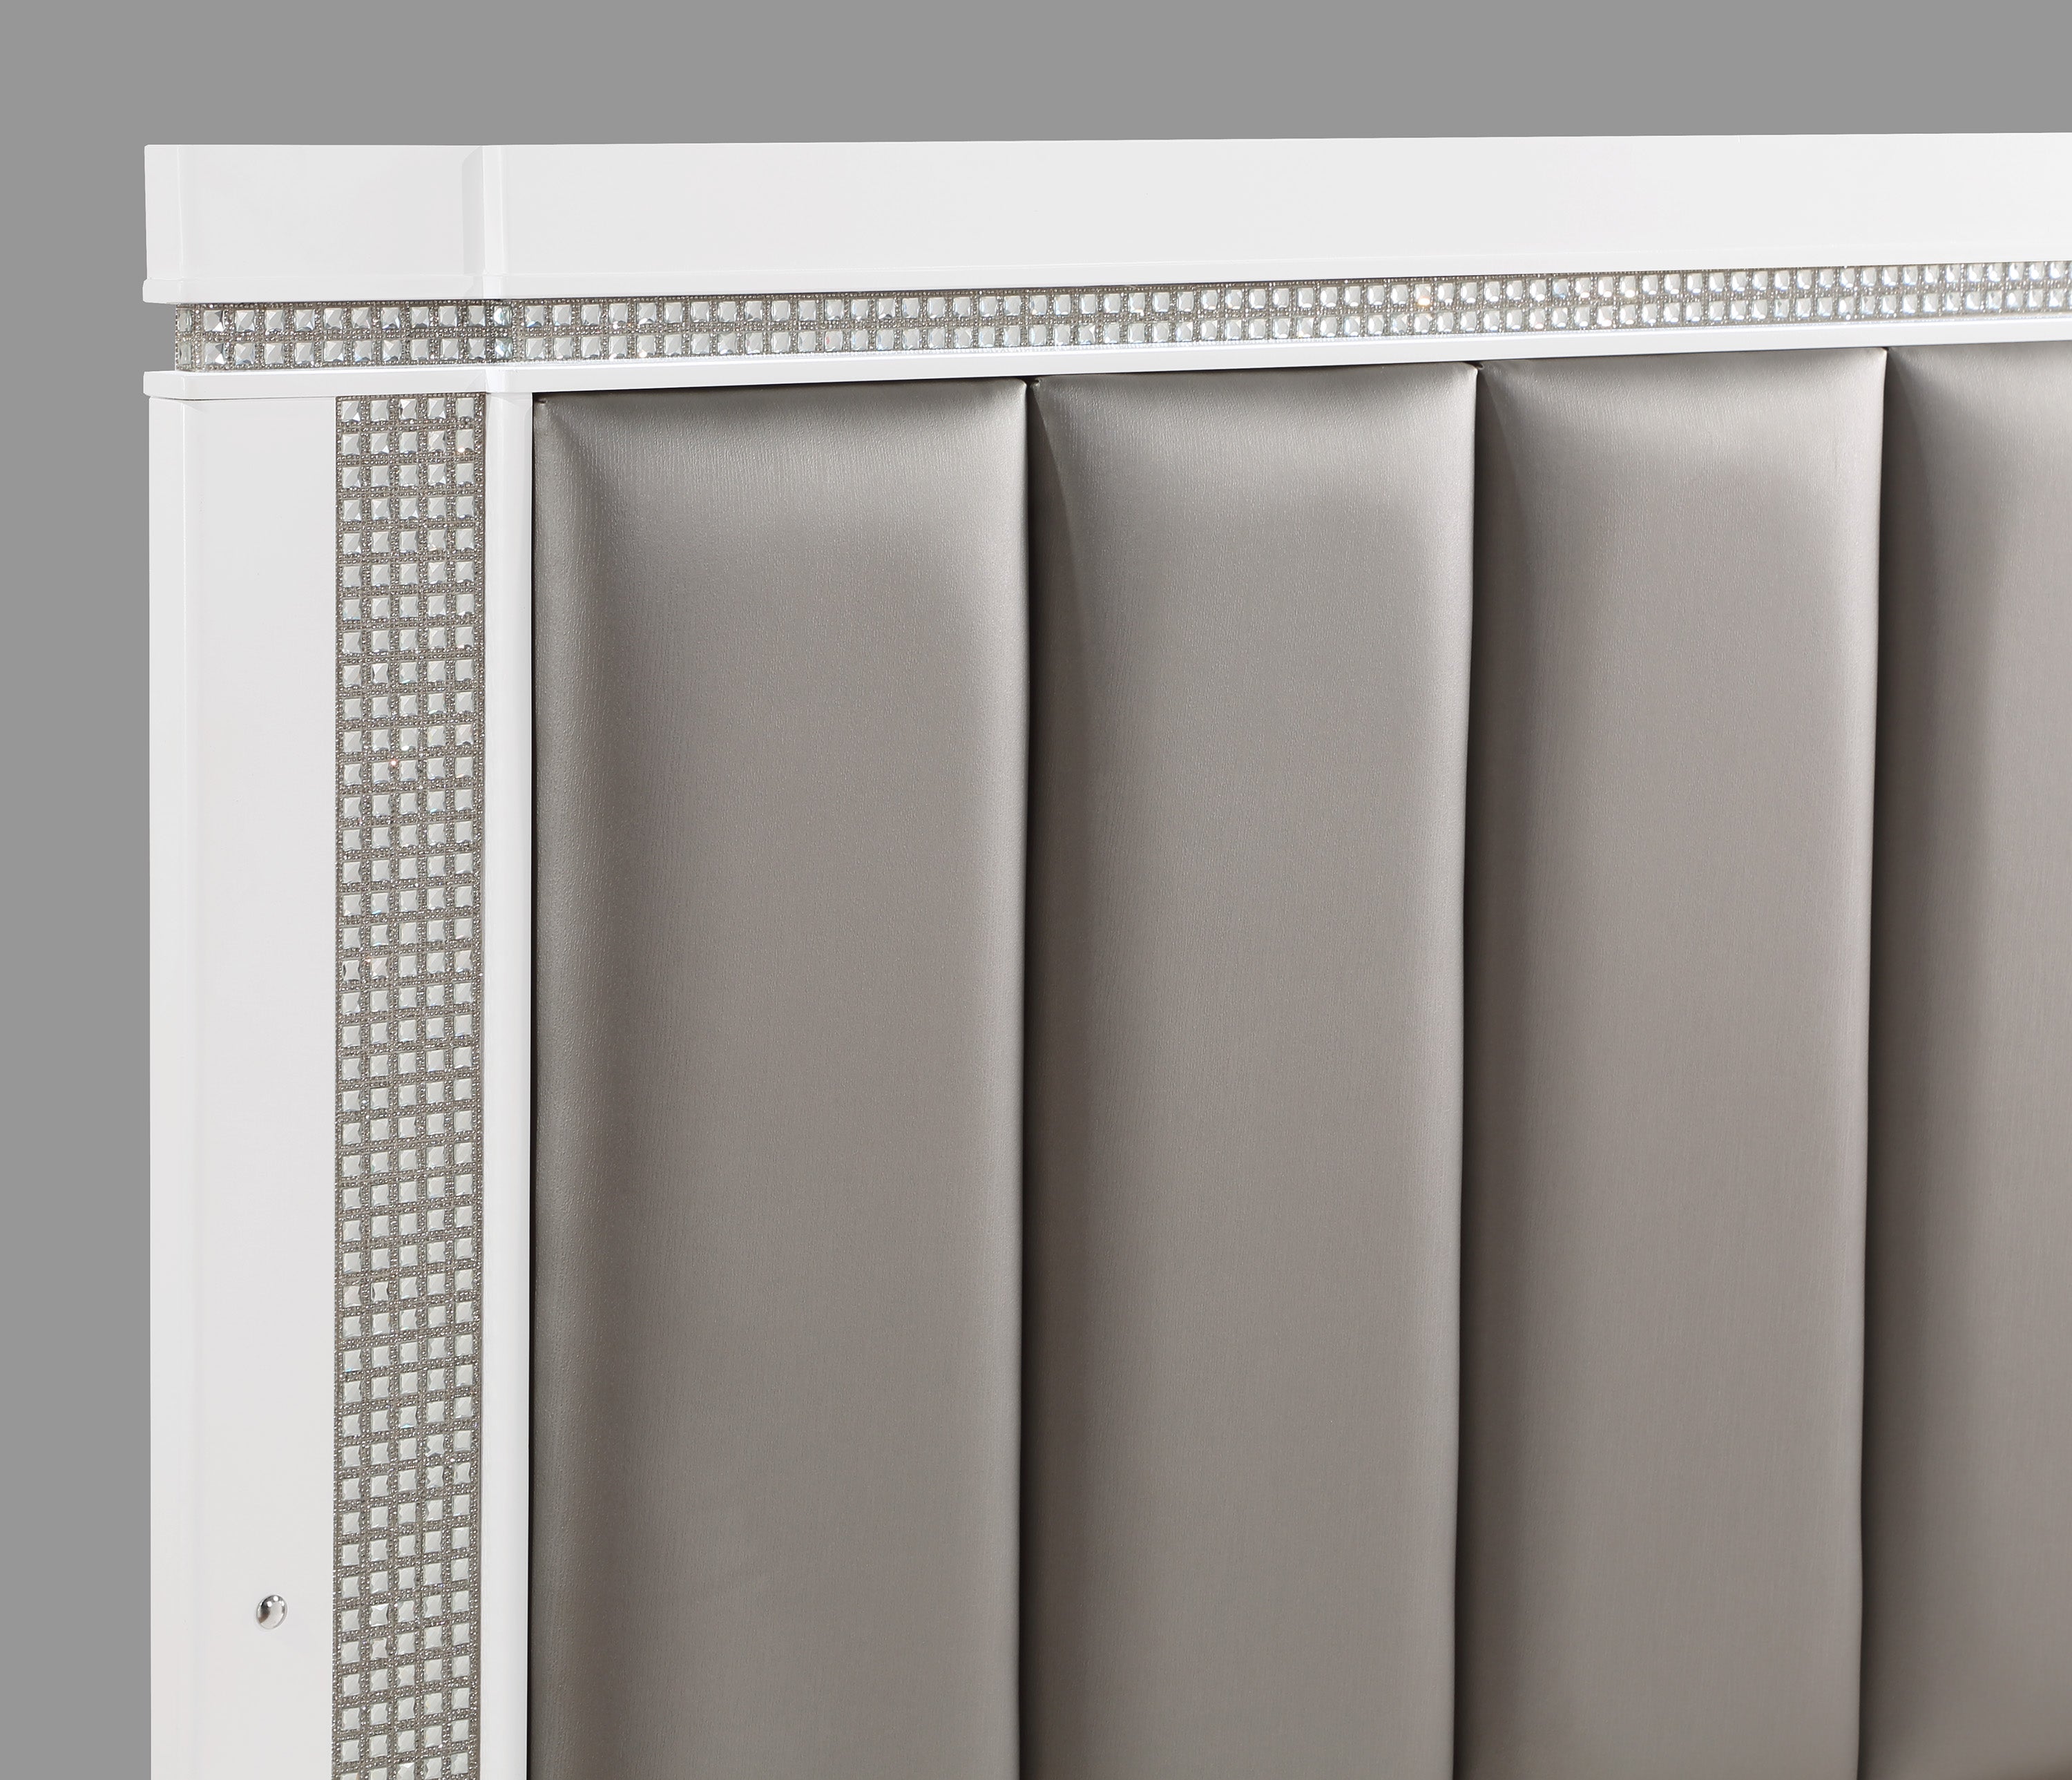 Ariane White/Silver King Upholstered Panel Bed - SET | B1690-K-HB | B1690-K-FB | B1690-KQ-RAIL - Bien Home Furniture &amp; Electronics